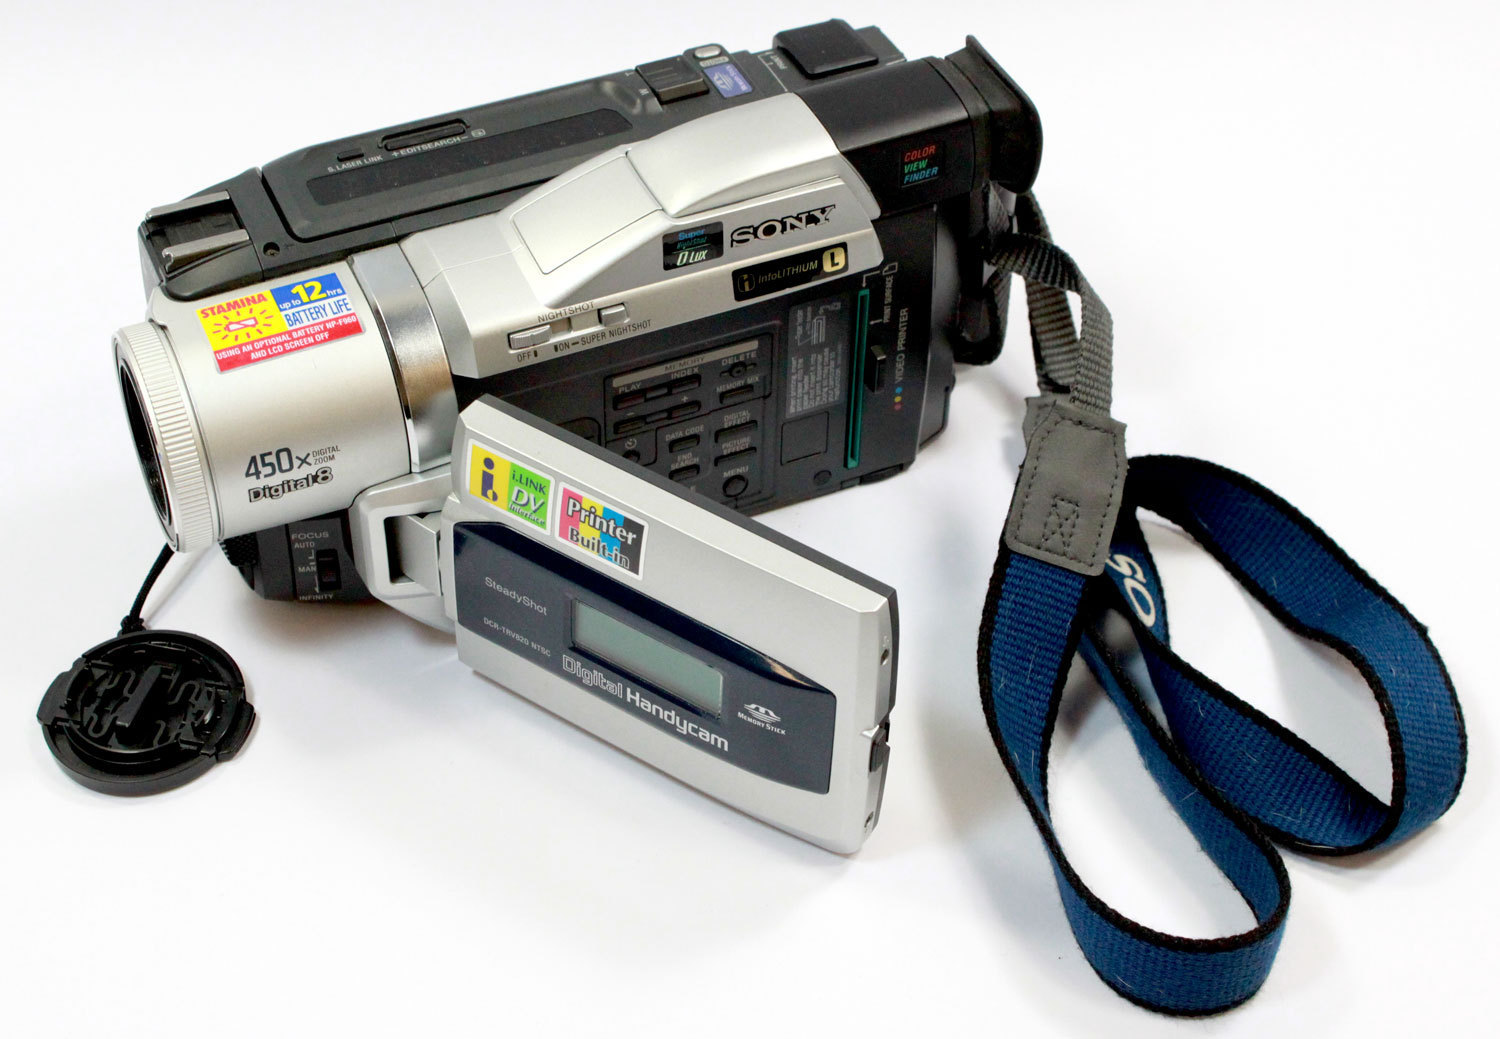 Sony Handycam DCR-TRV820 large image 0